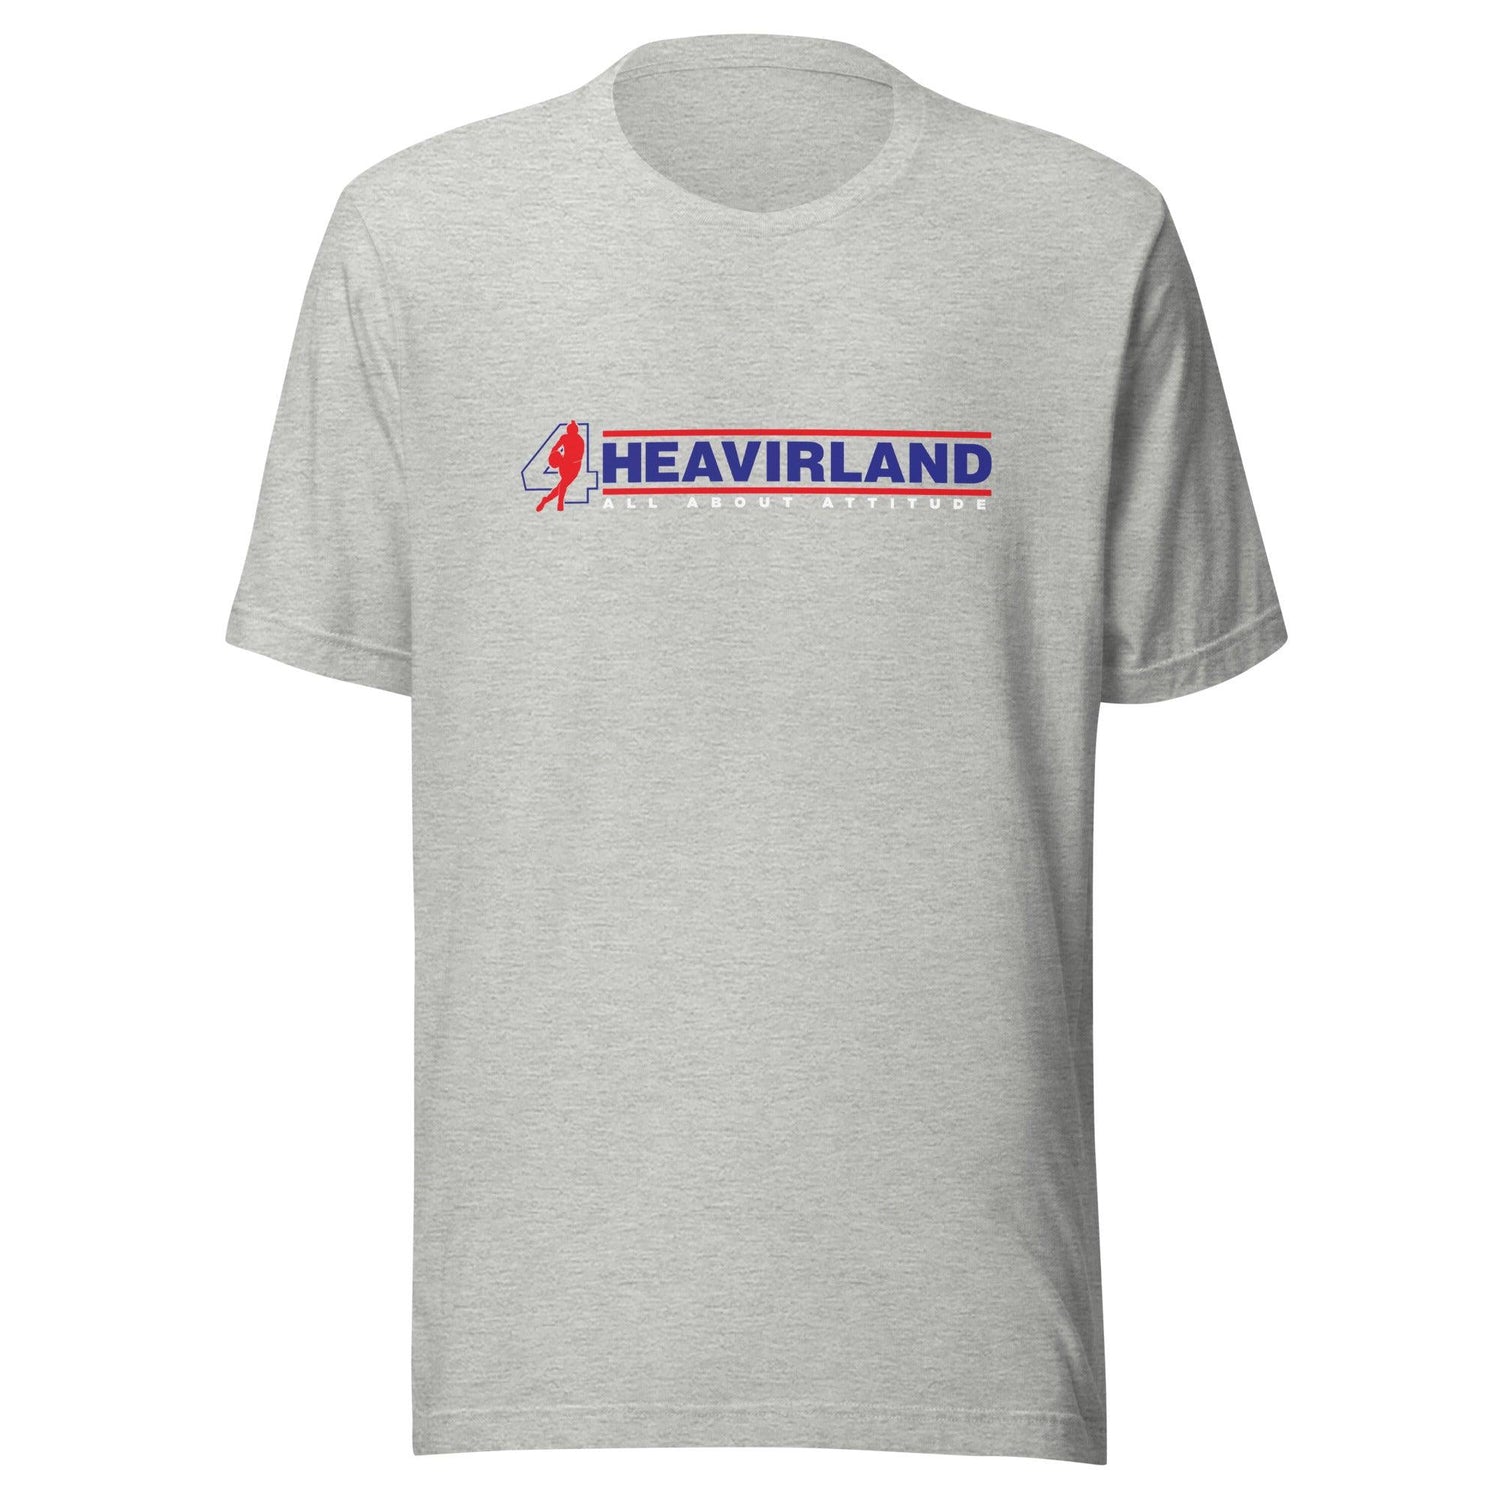 Nicole Heavirland "Jersey" t-shirt - Fan Arch